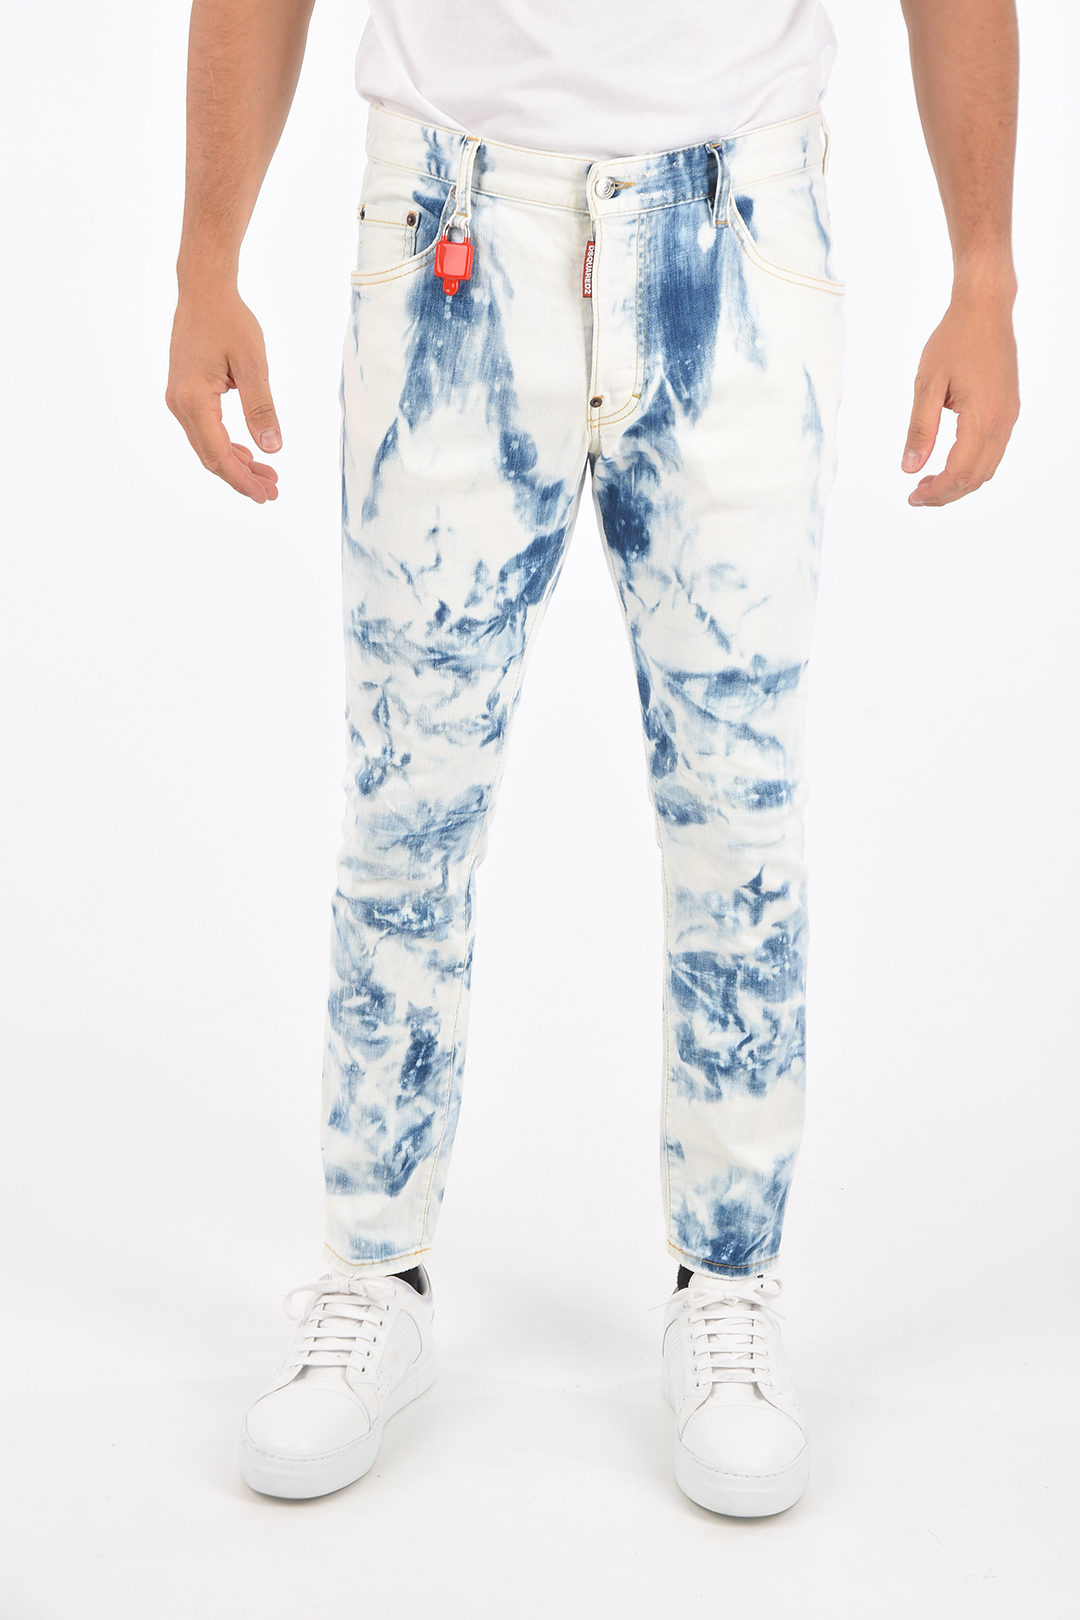 Buy U.S. Polo Assn. Denim Co. Henry Cropped Acid Wash Jeans - NNNOW.com